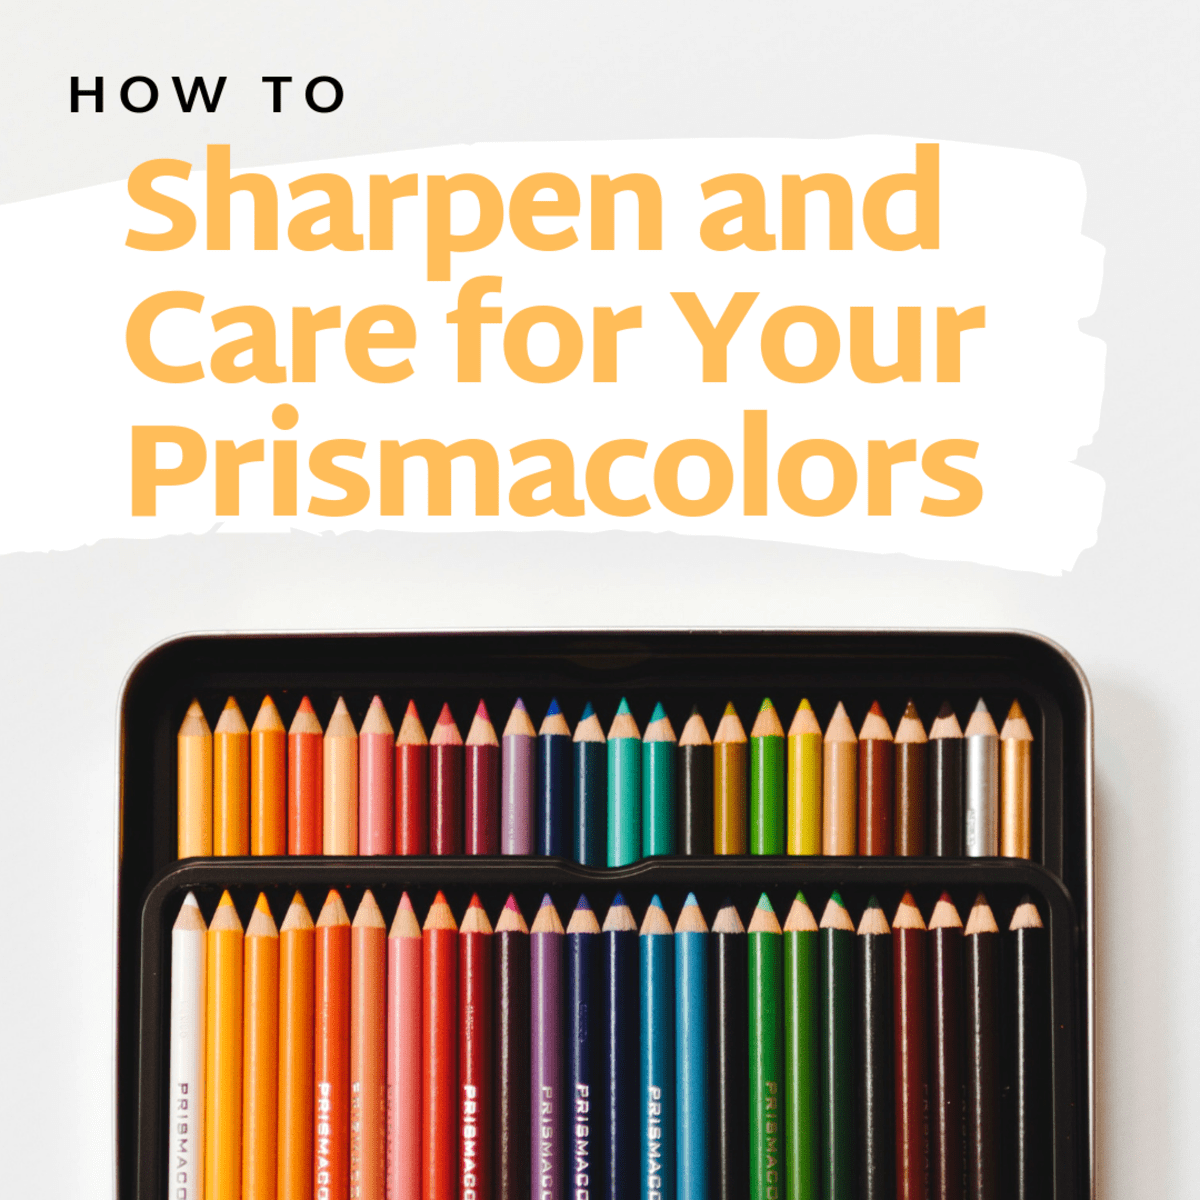 Prismacolor 1774266 Scholar Colored Pencil Sharpener, 3 Piece